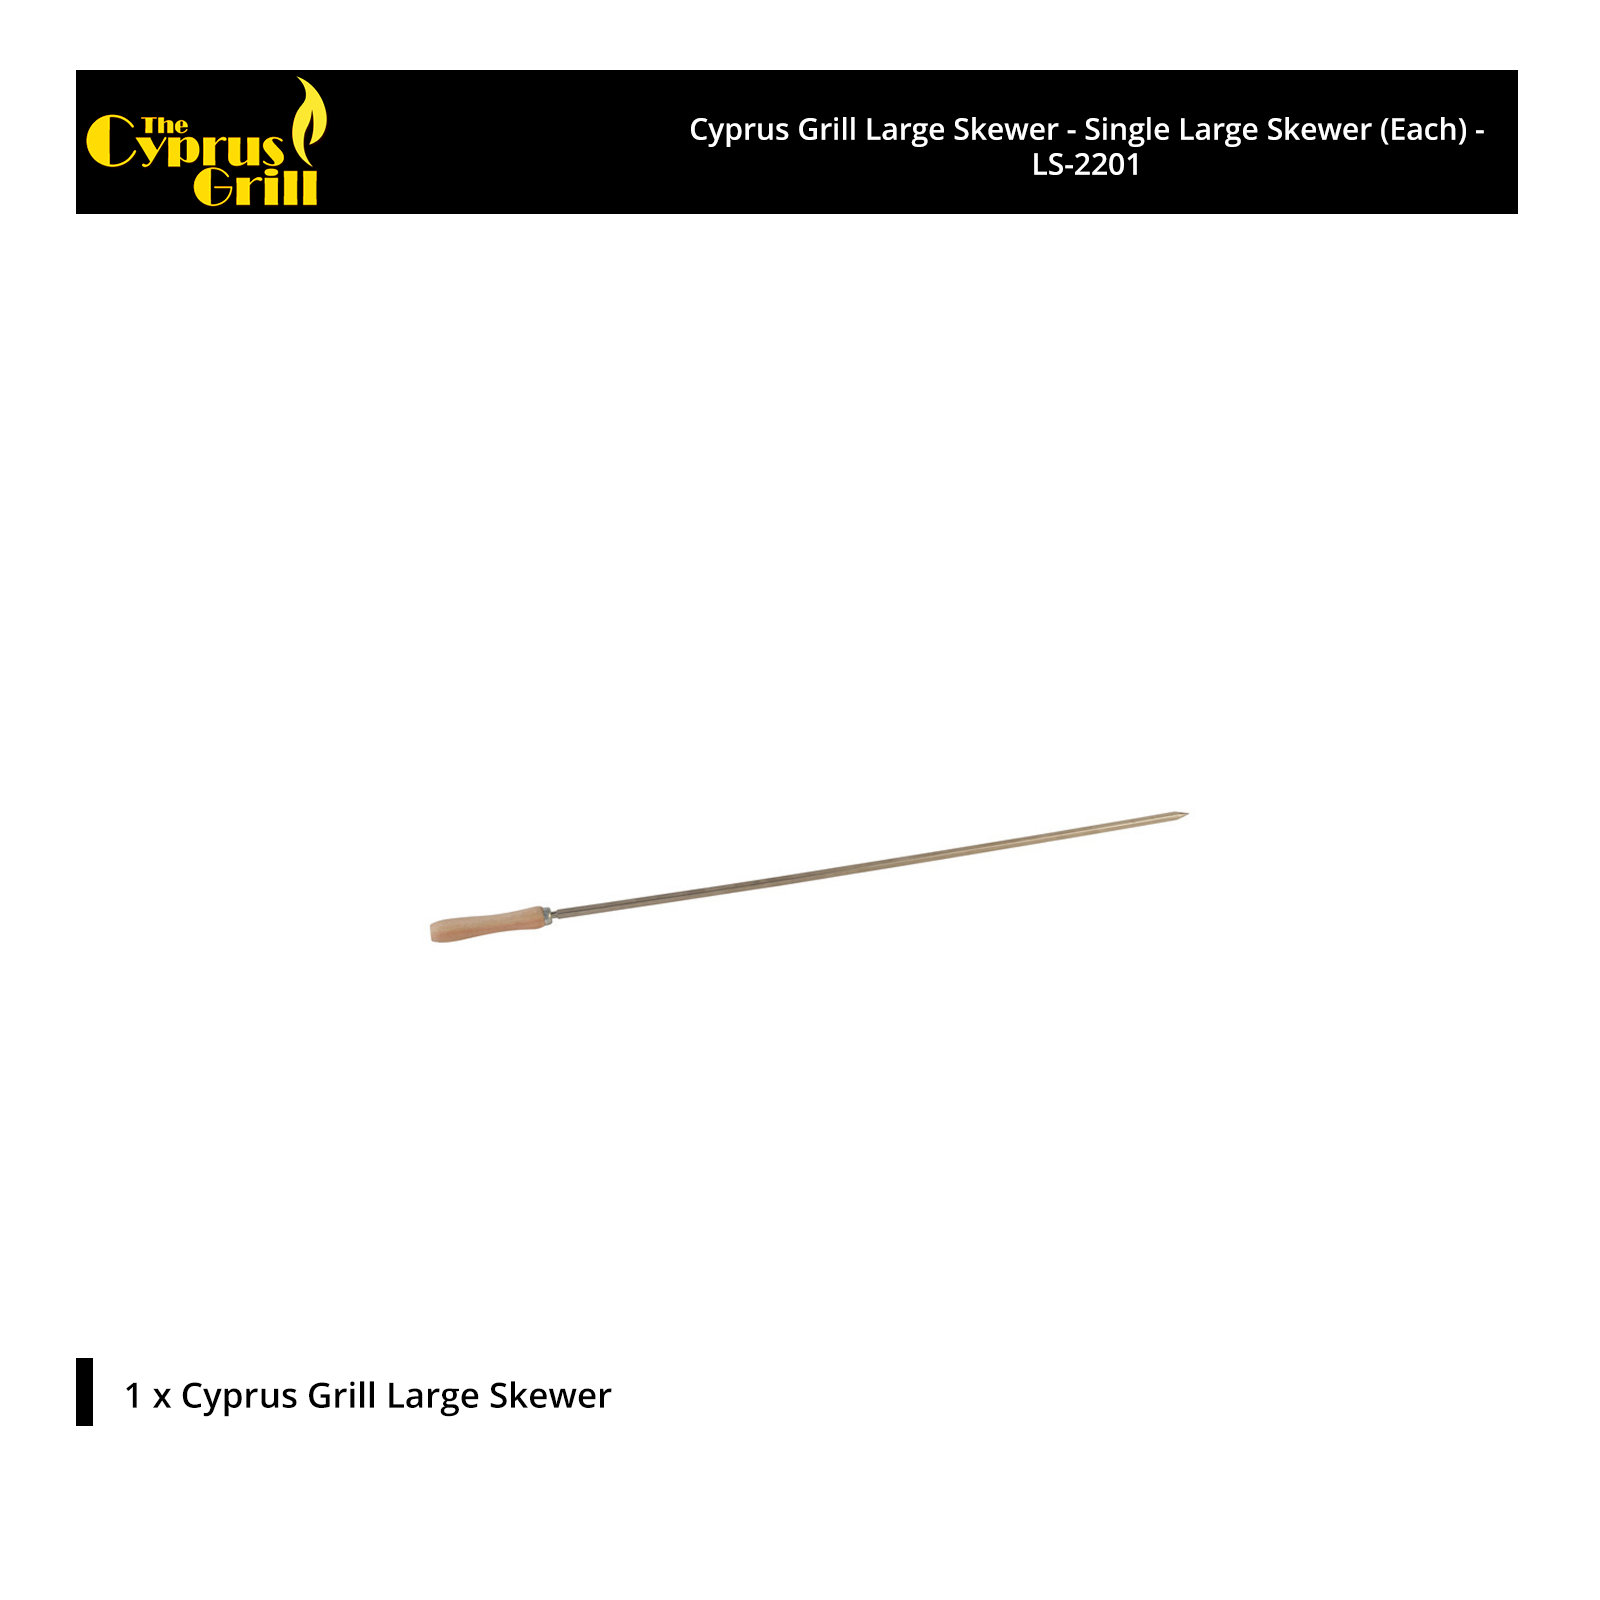 Cyprus Grill Large Skewer - Single Large Skewer 76cm Long x 8mm thick (Each) - LS-2201